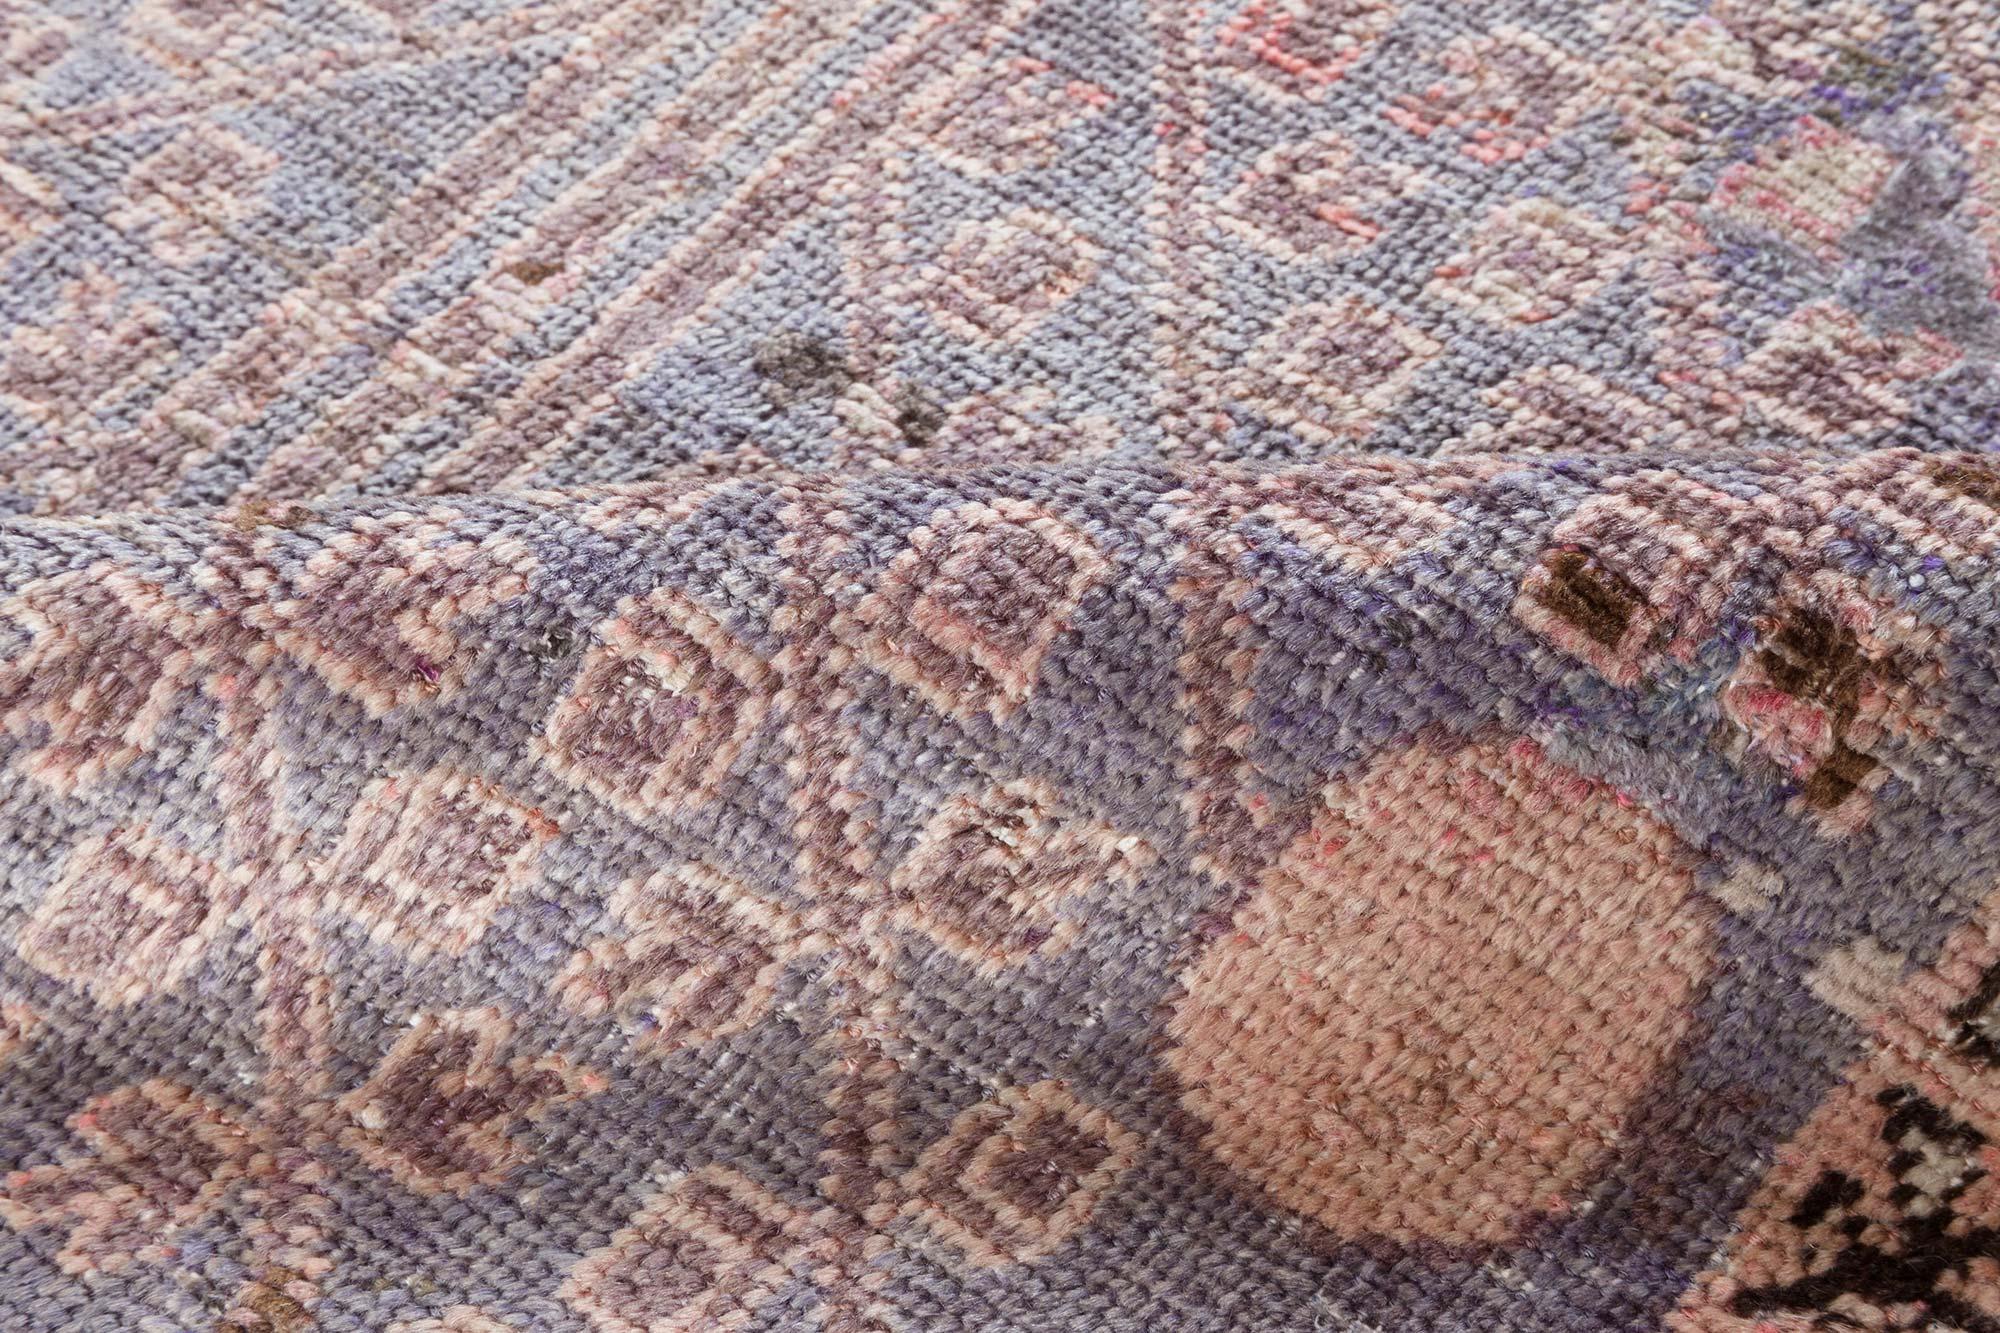 Midcentury Samarkand handmade wool rug.
Size: 3'8